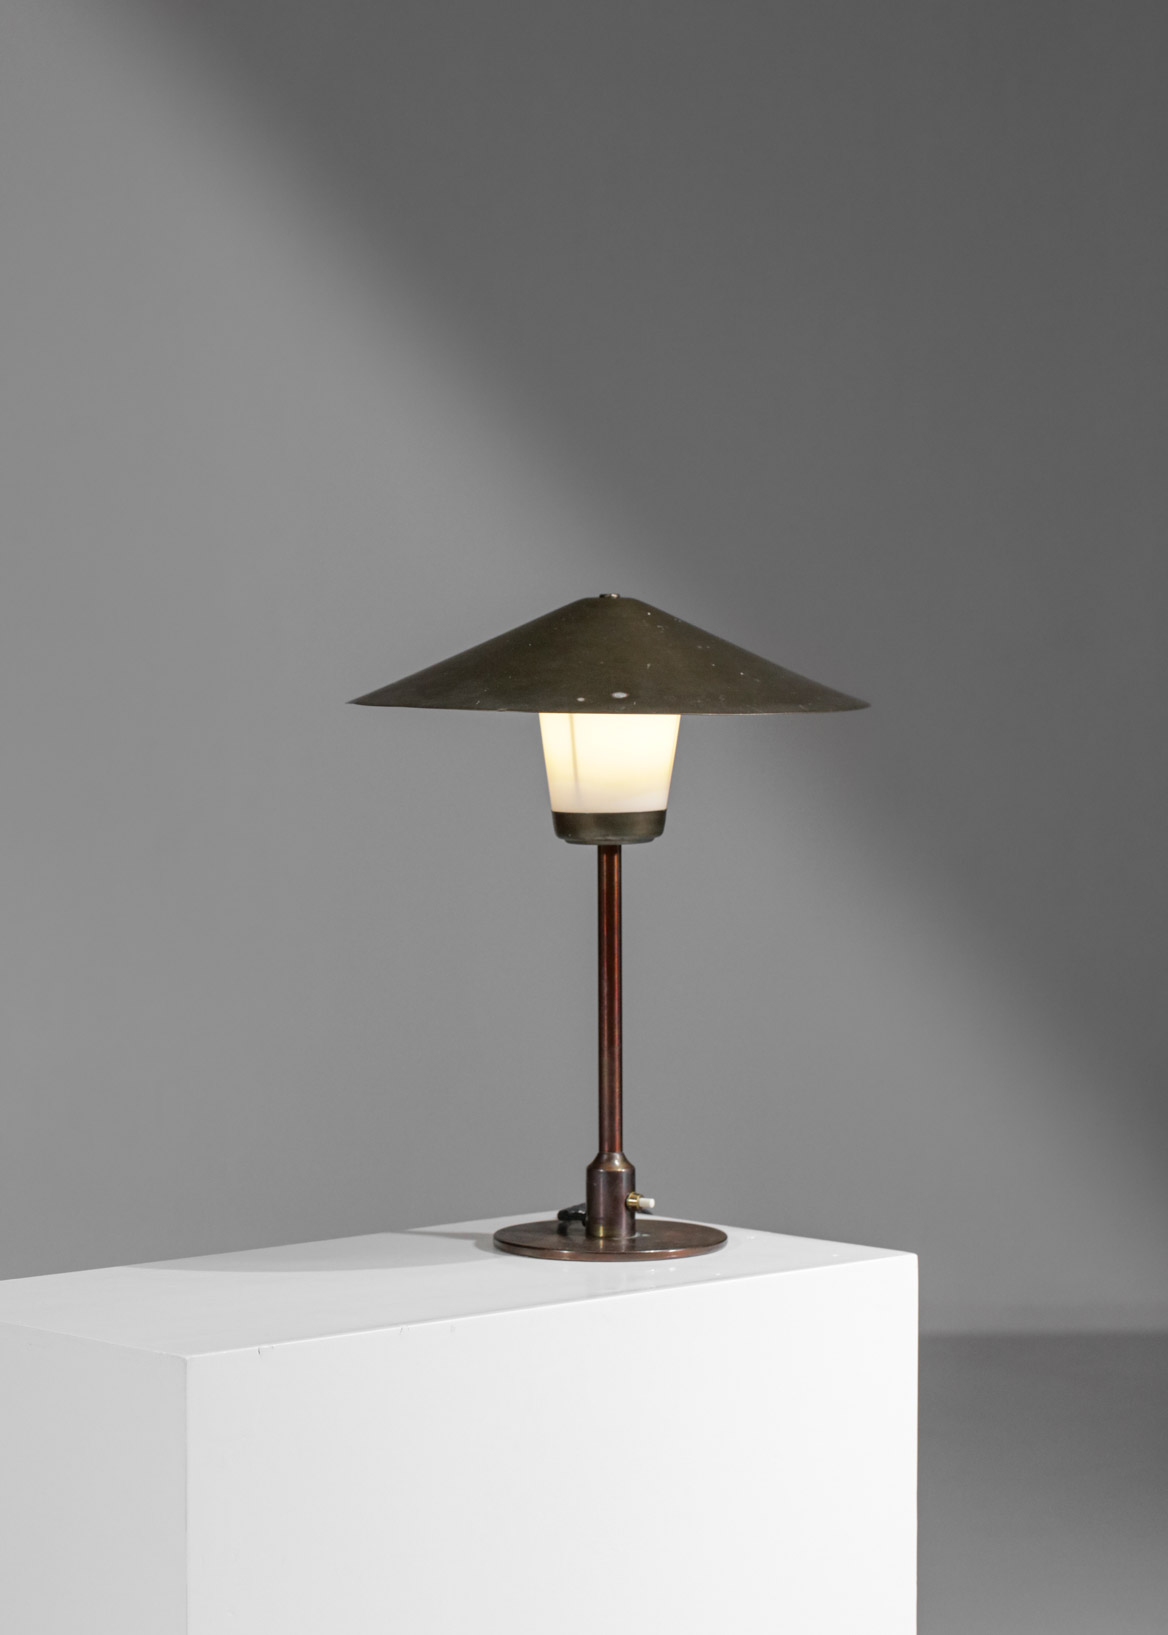 Forberedende navn plast Dum Danish desk or table lamp from the 1950s attributed to Lyfa – E149 – Danke  Galerie